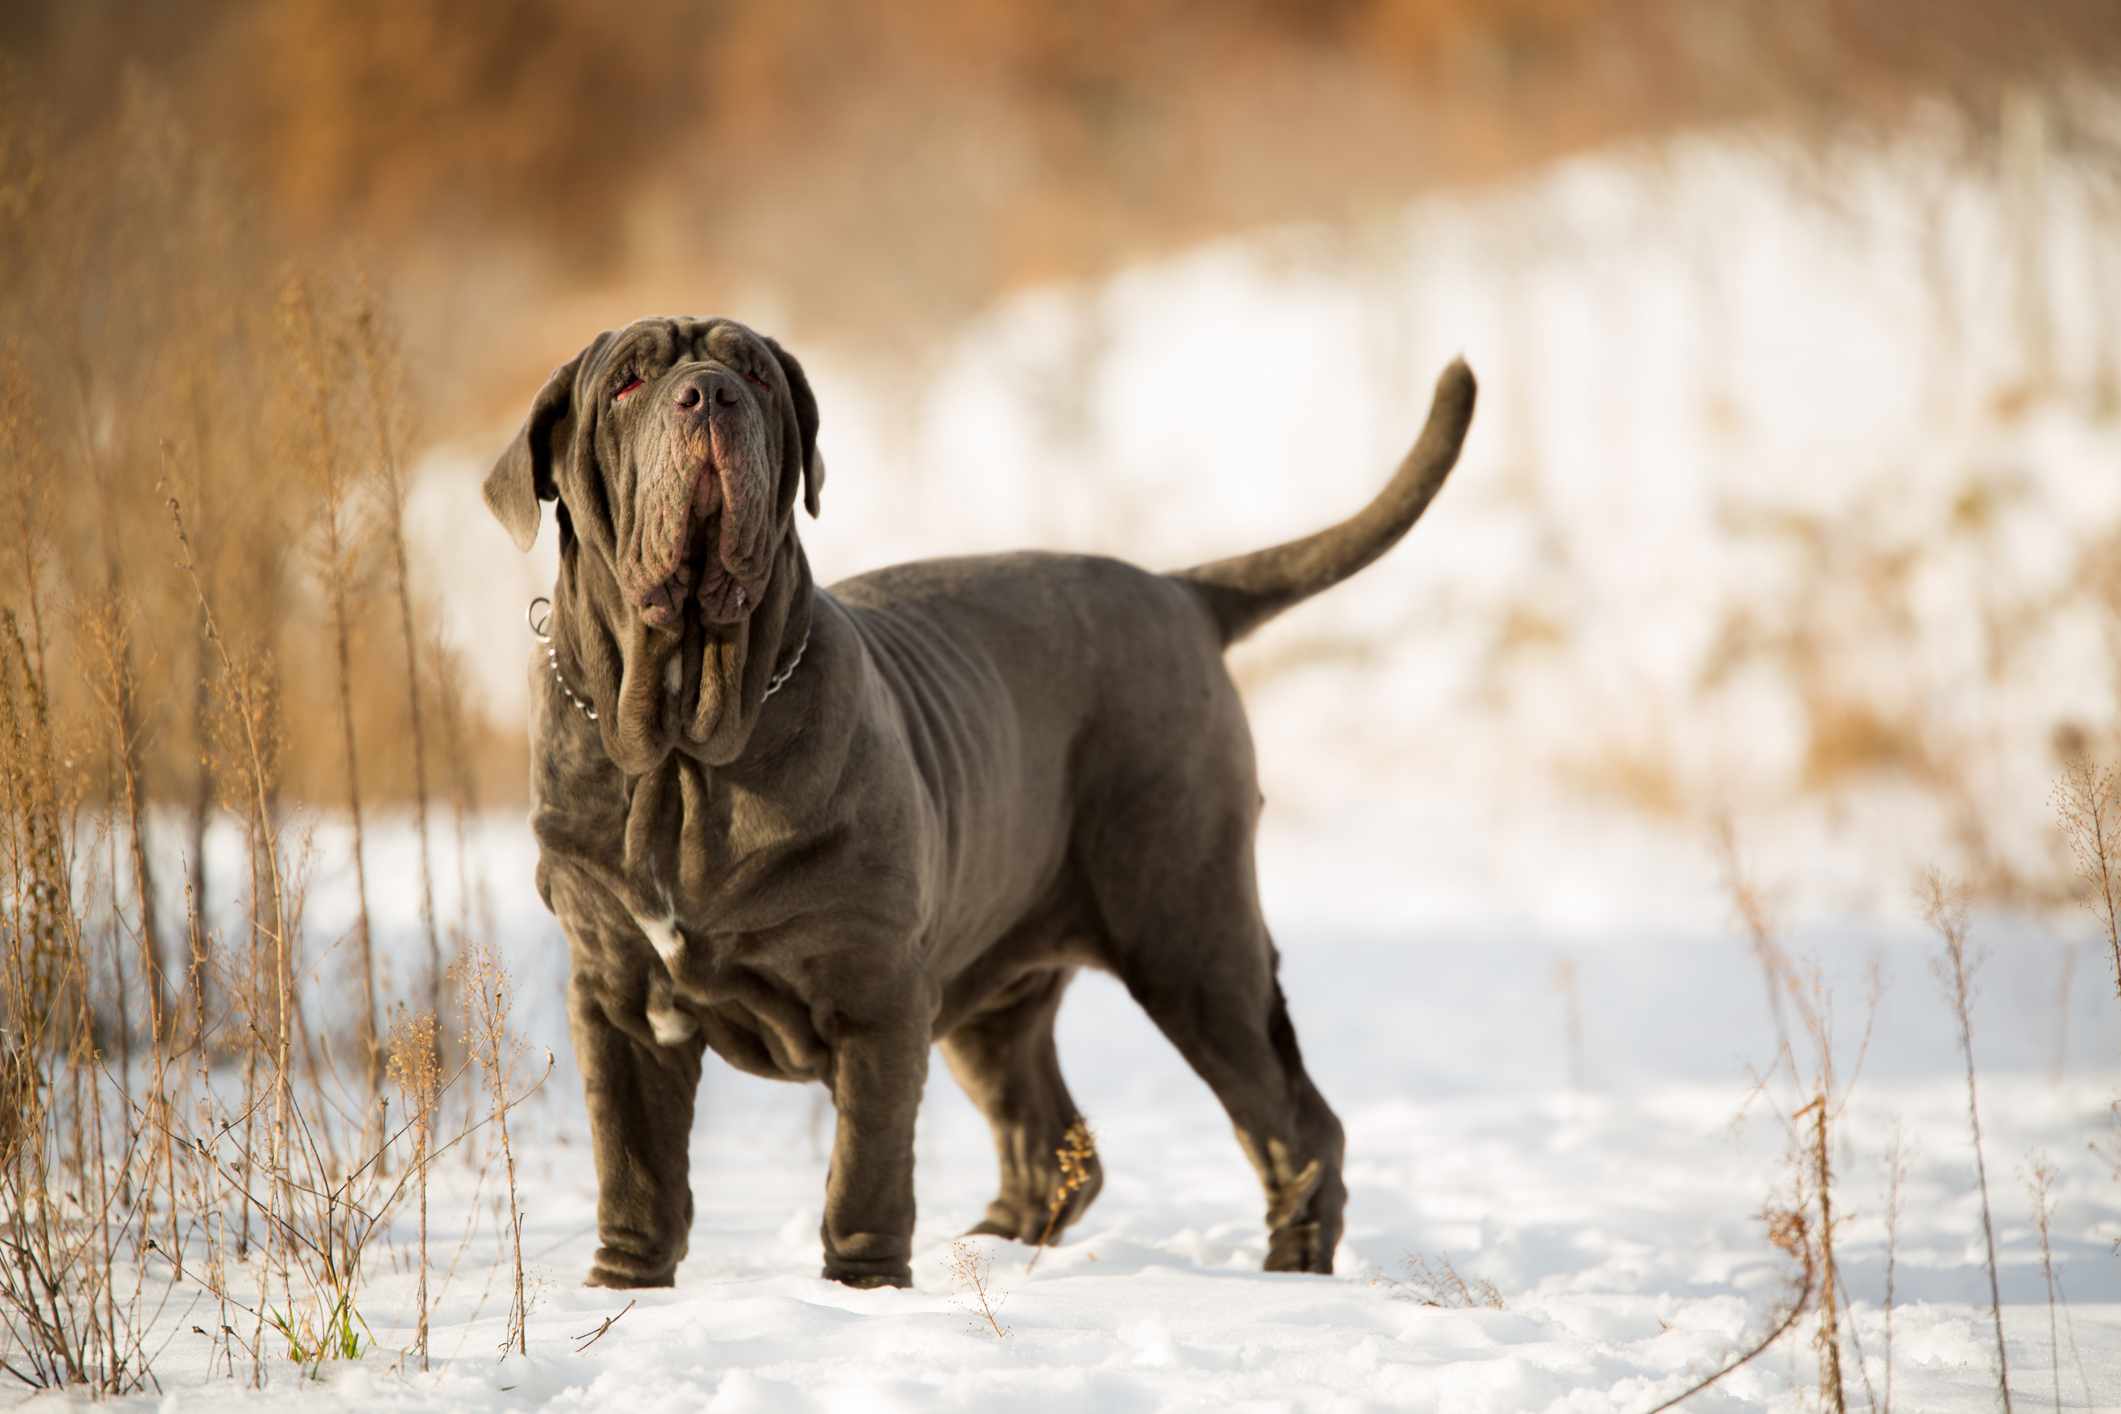 Neapolitan Mastiff standing in the snow